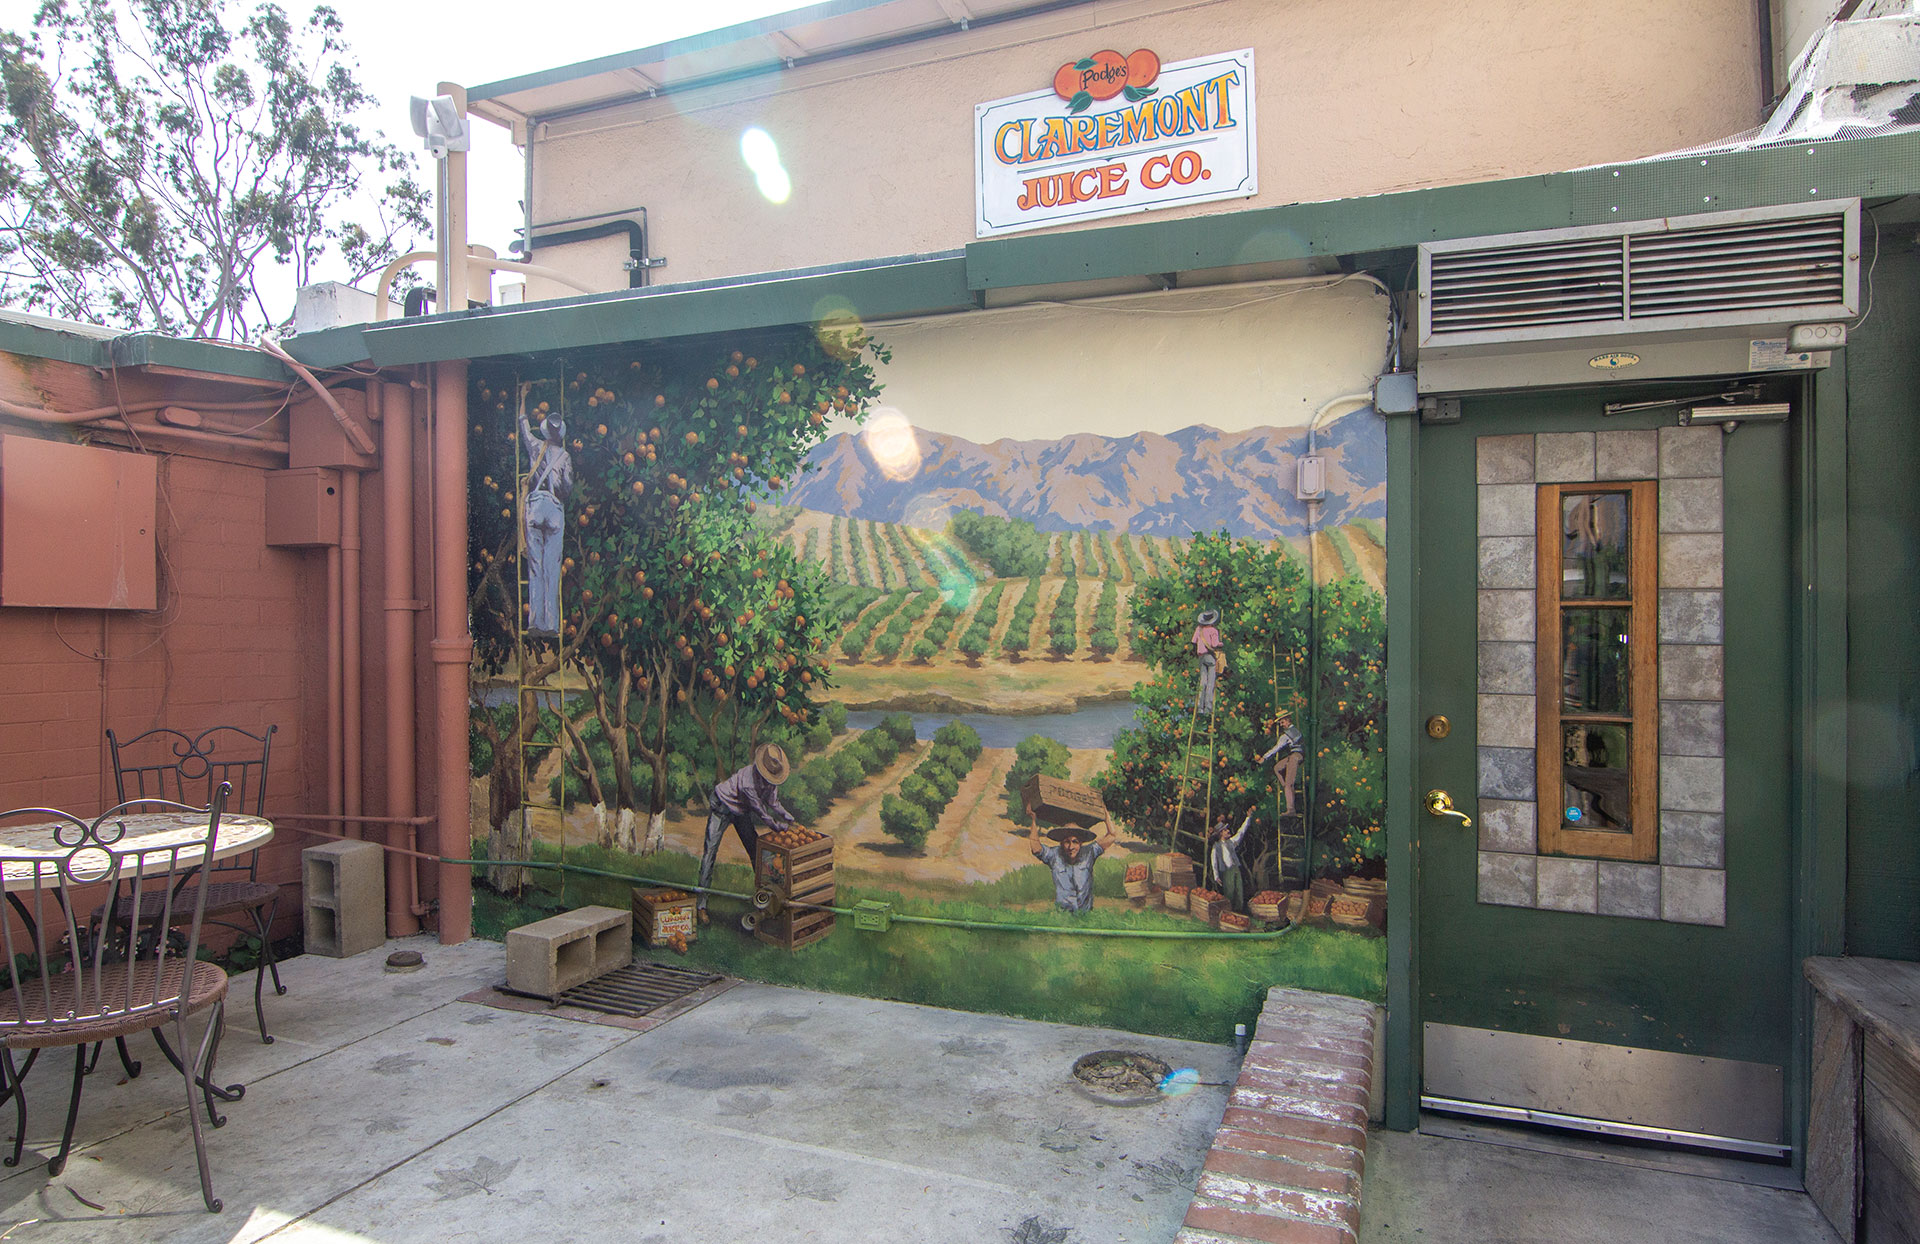  Podge's Claremont Juice Co., Claremont, CA 